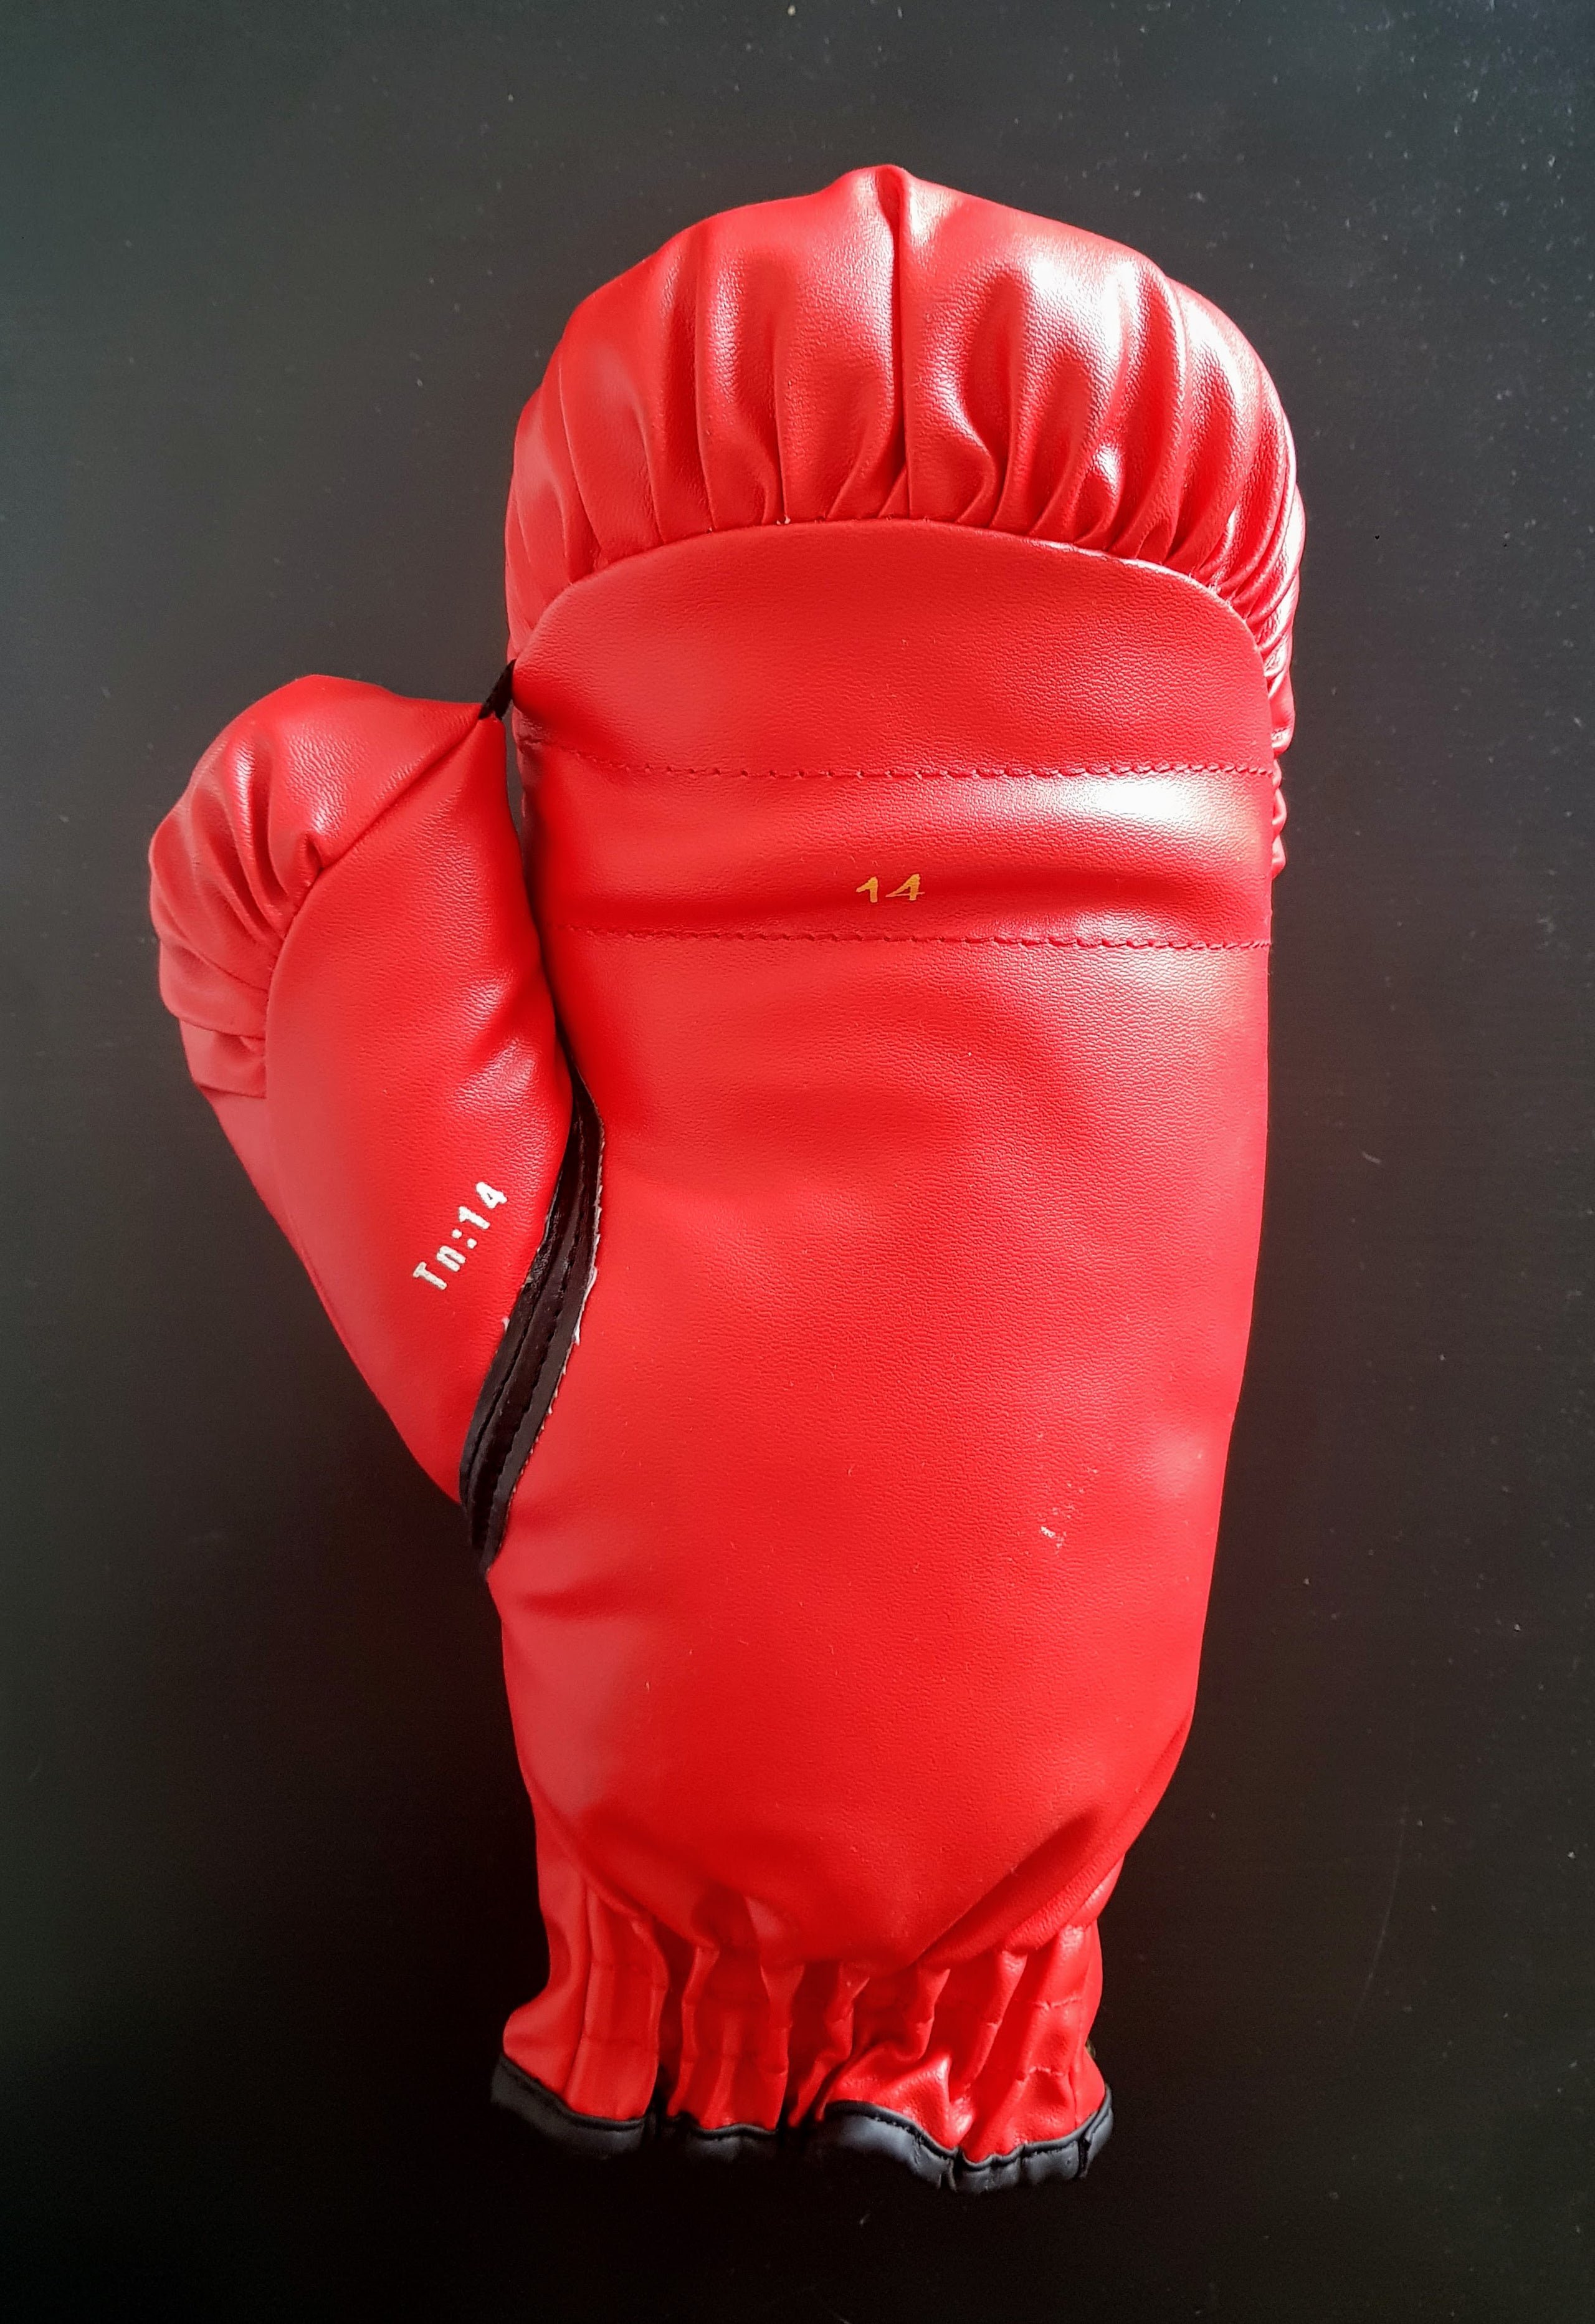 Evander Holyfield signed boxing glove